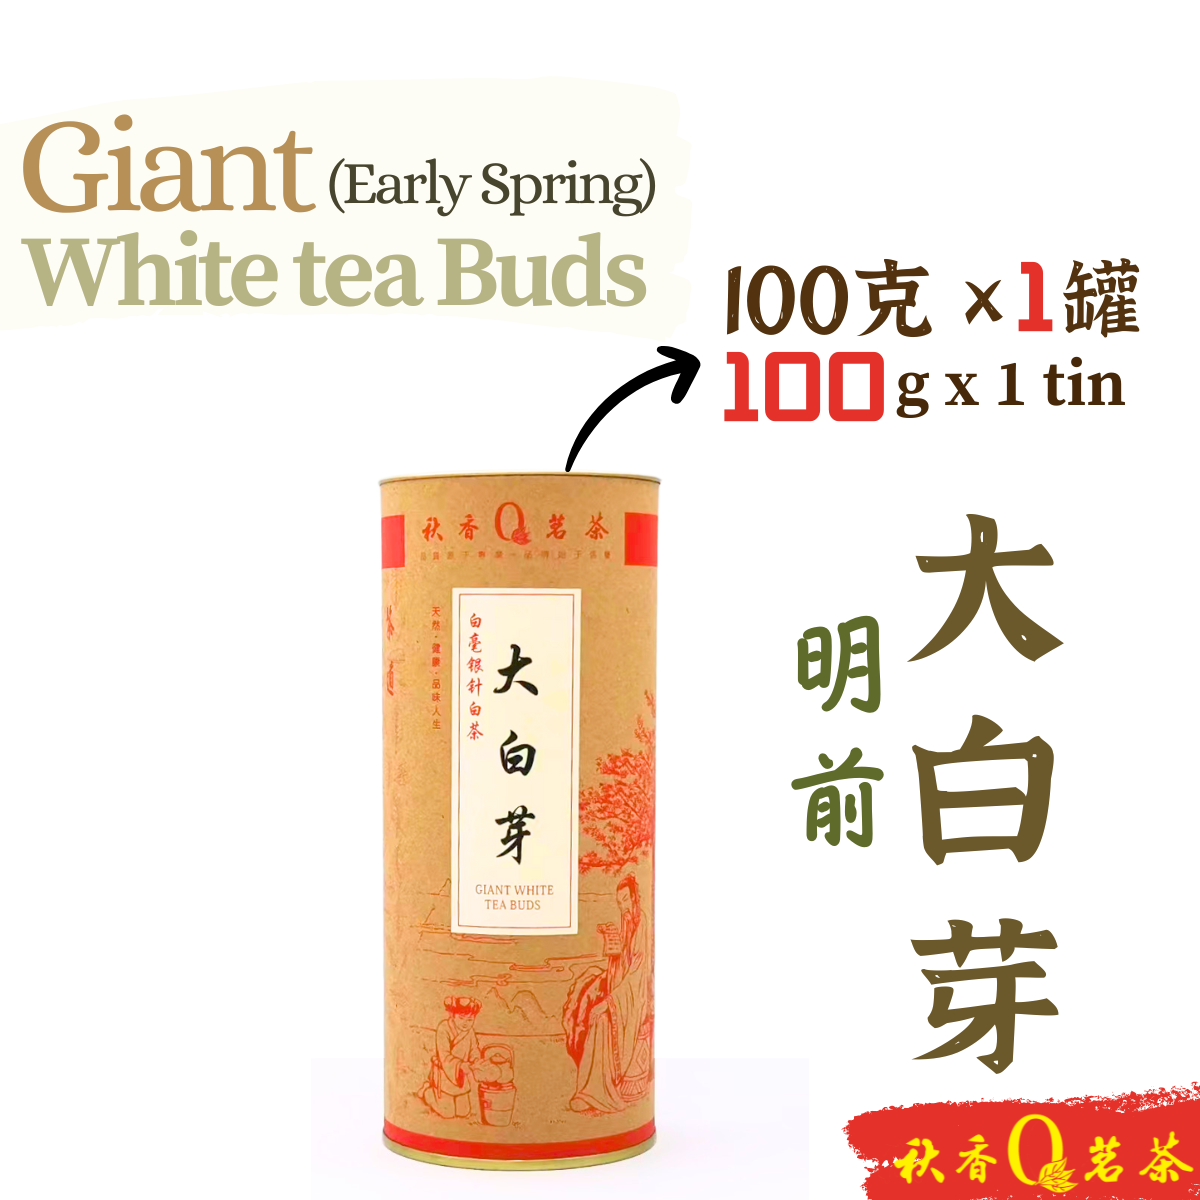 明前大白芽 Giant White tea Buds (Early Spring)【100g】｜【白茶 White tea】